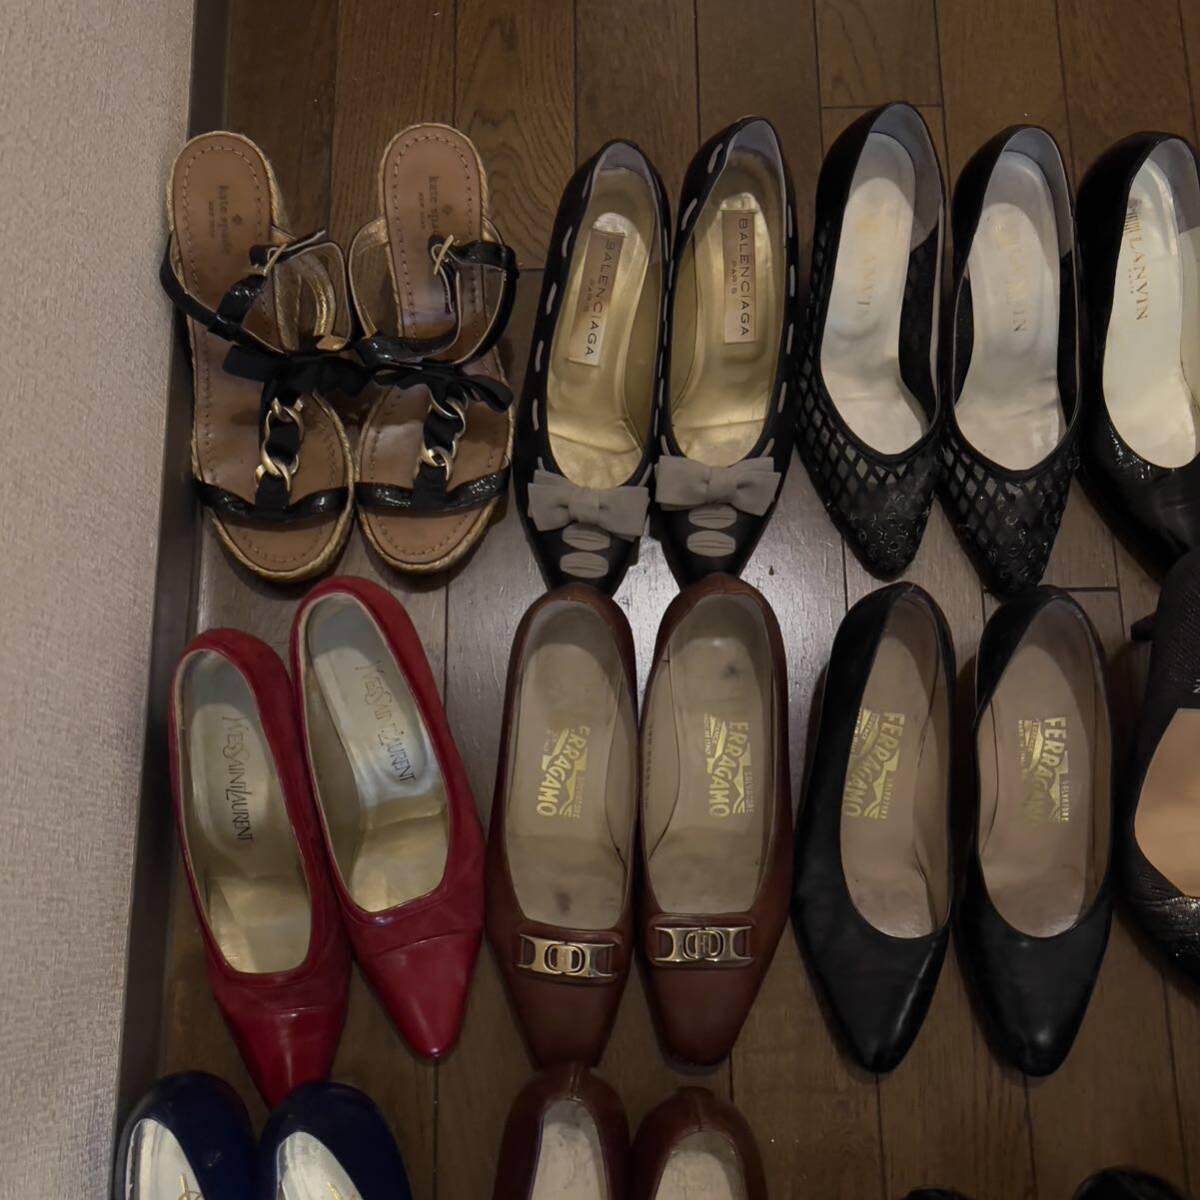 1 start set sale 30 pairs set brand shoes pumps sandals Ferragamo GUCCI YSL TORY BURCH BOTTEGA VENETA kate spade Junk 